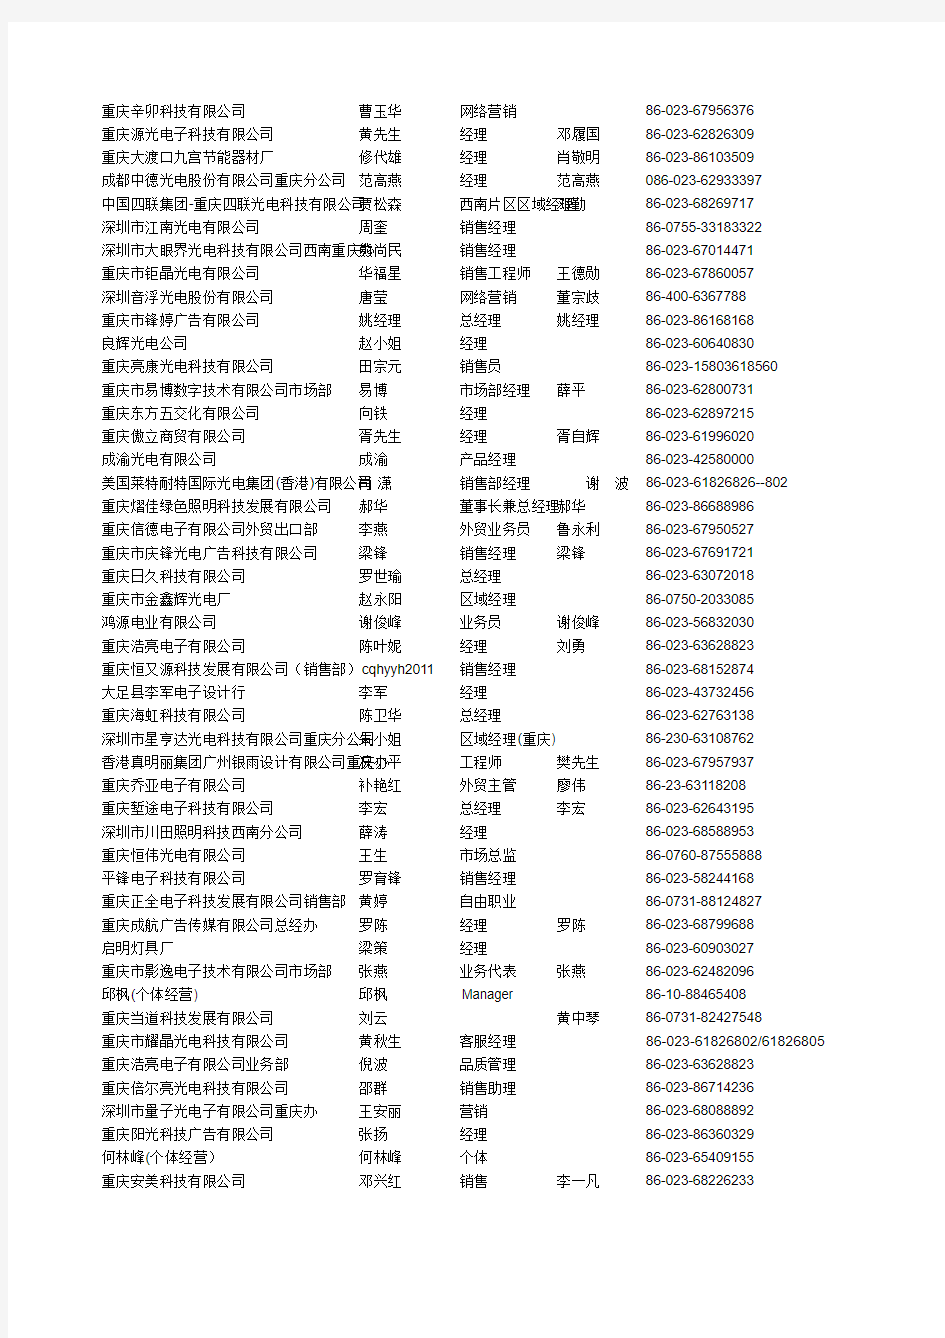 重庆LED企业名录288条